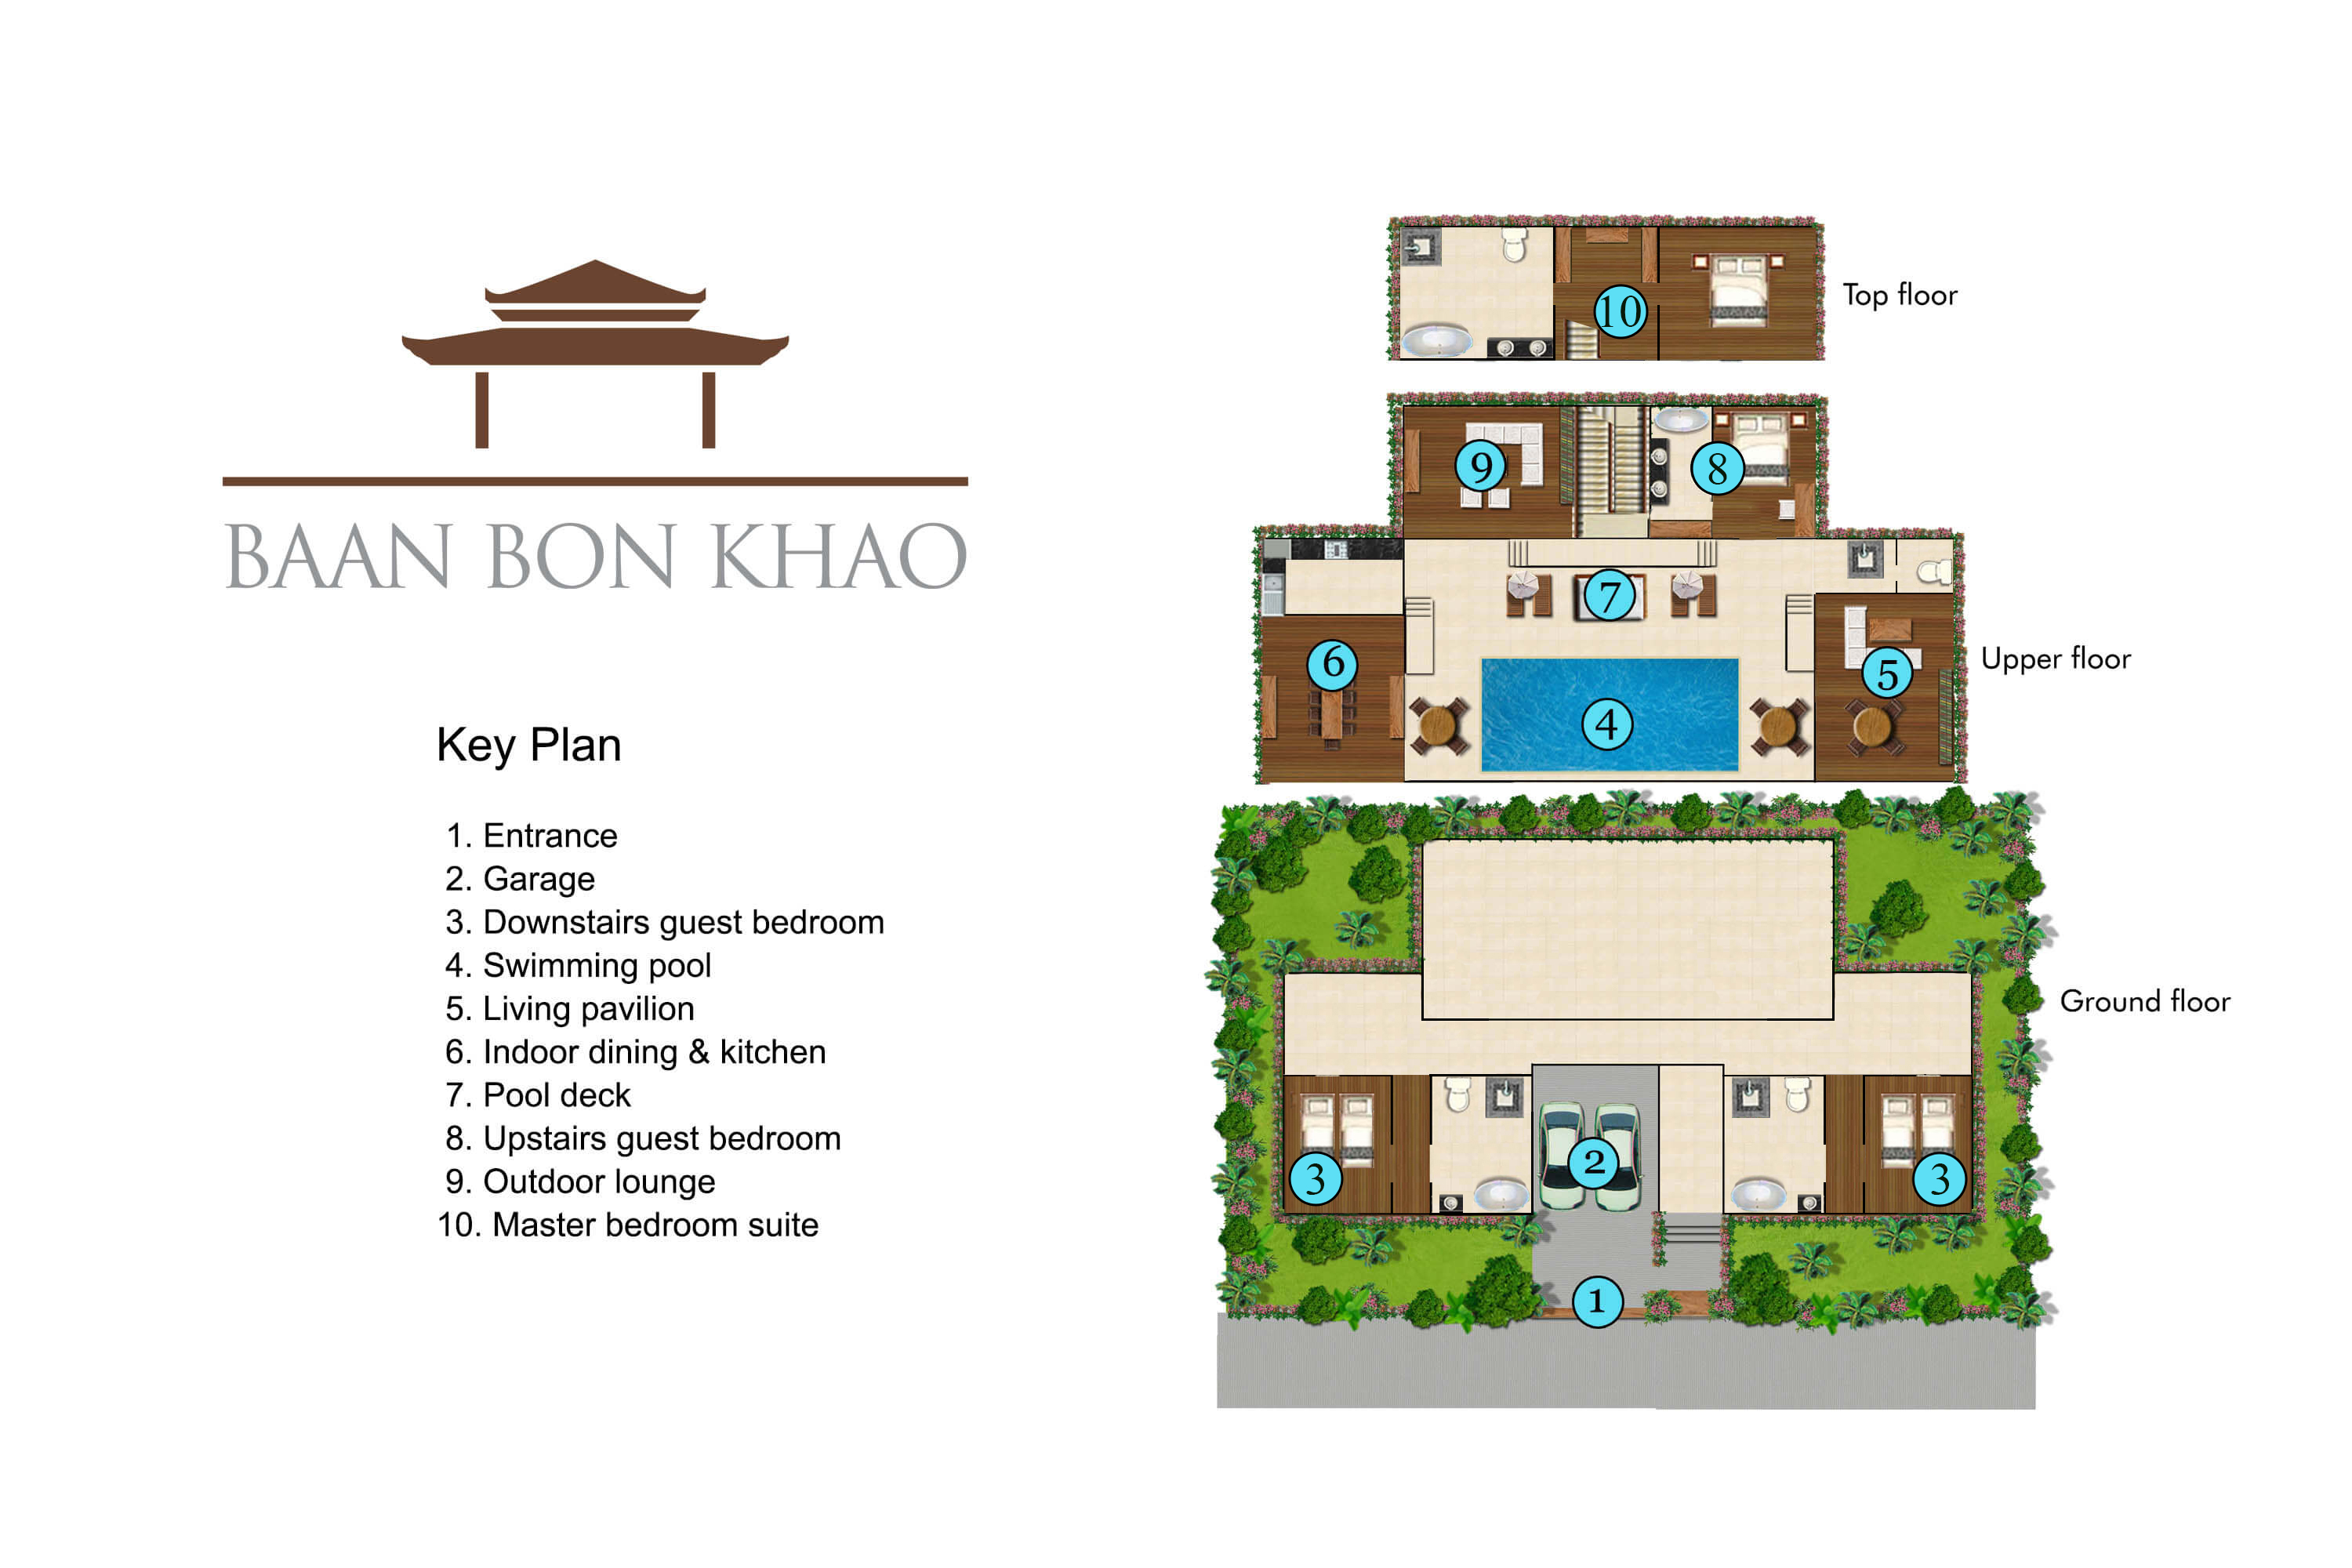 Baan Bon Khao